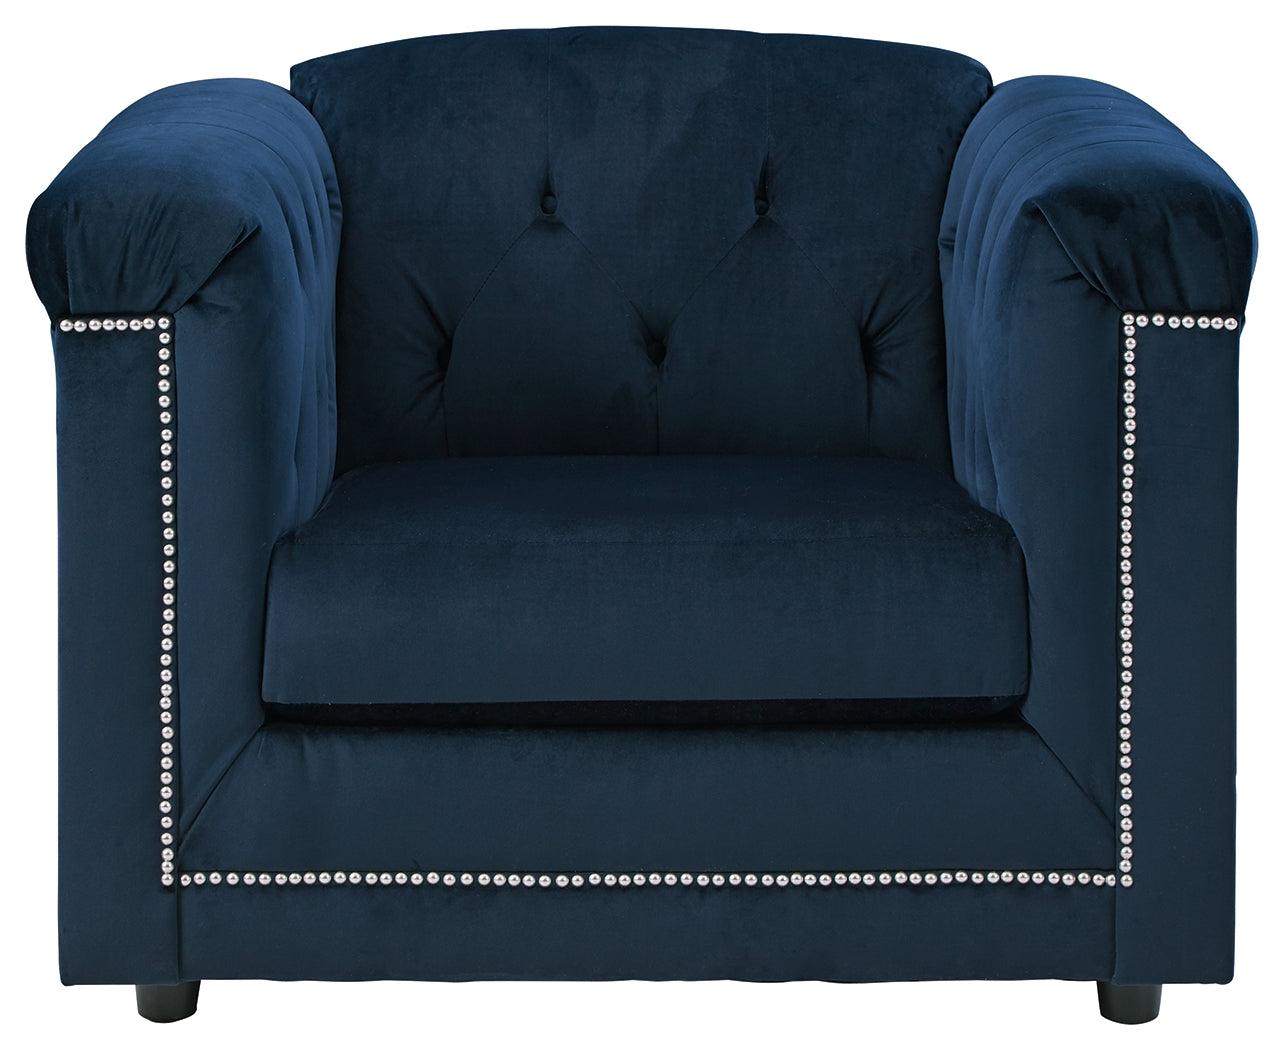 Josanna Navy Sofa, Loveseat And Chair - Ella Furniture